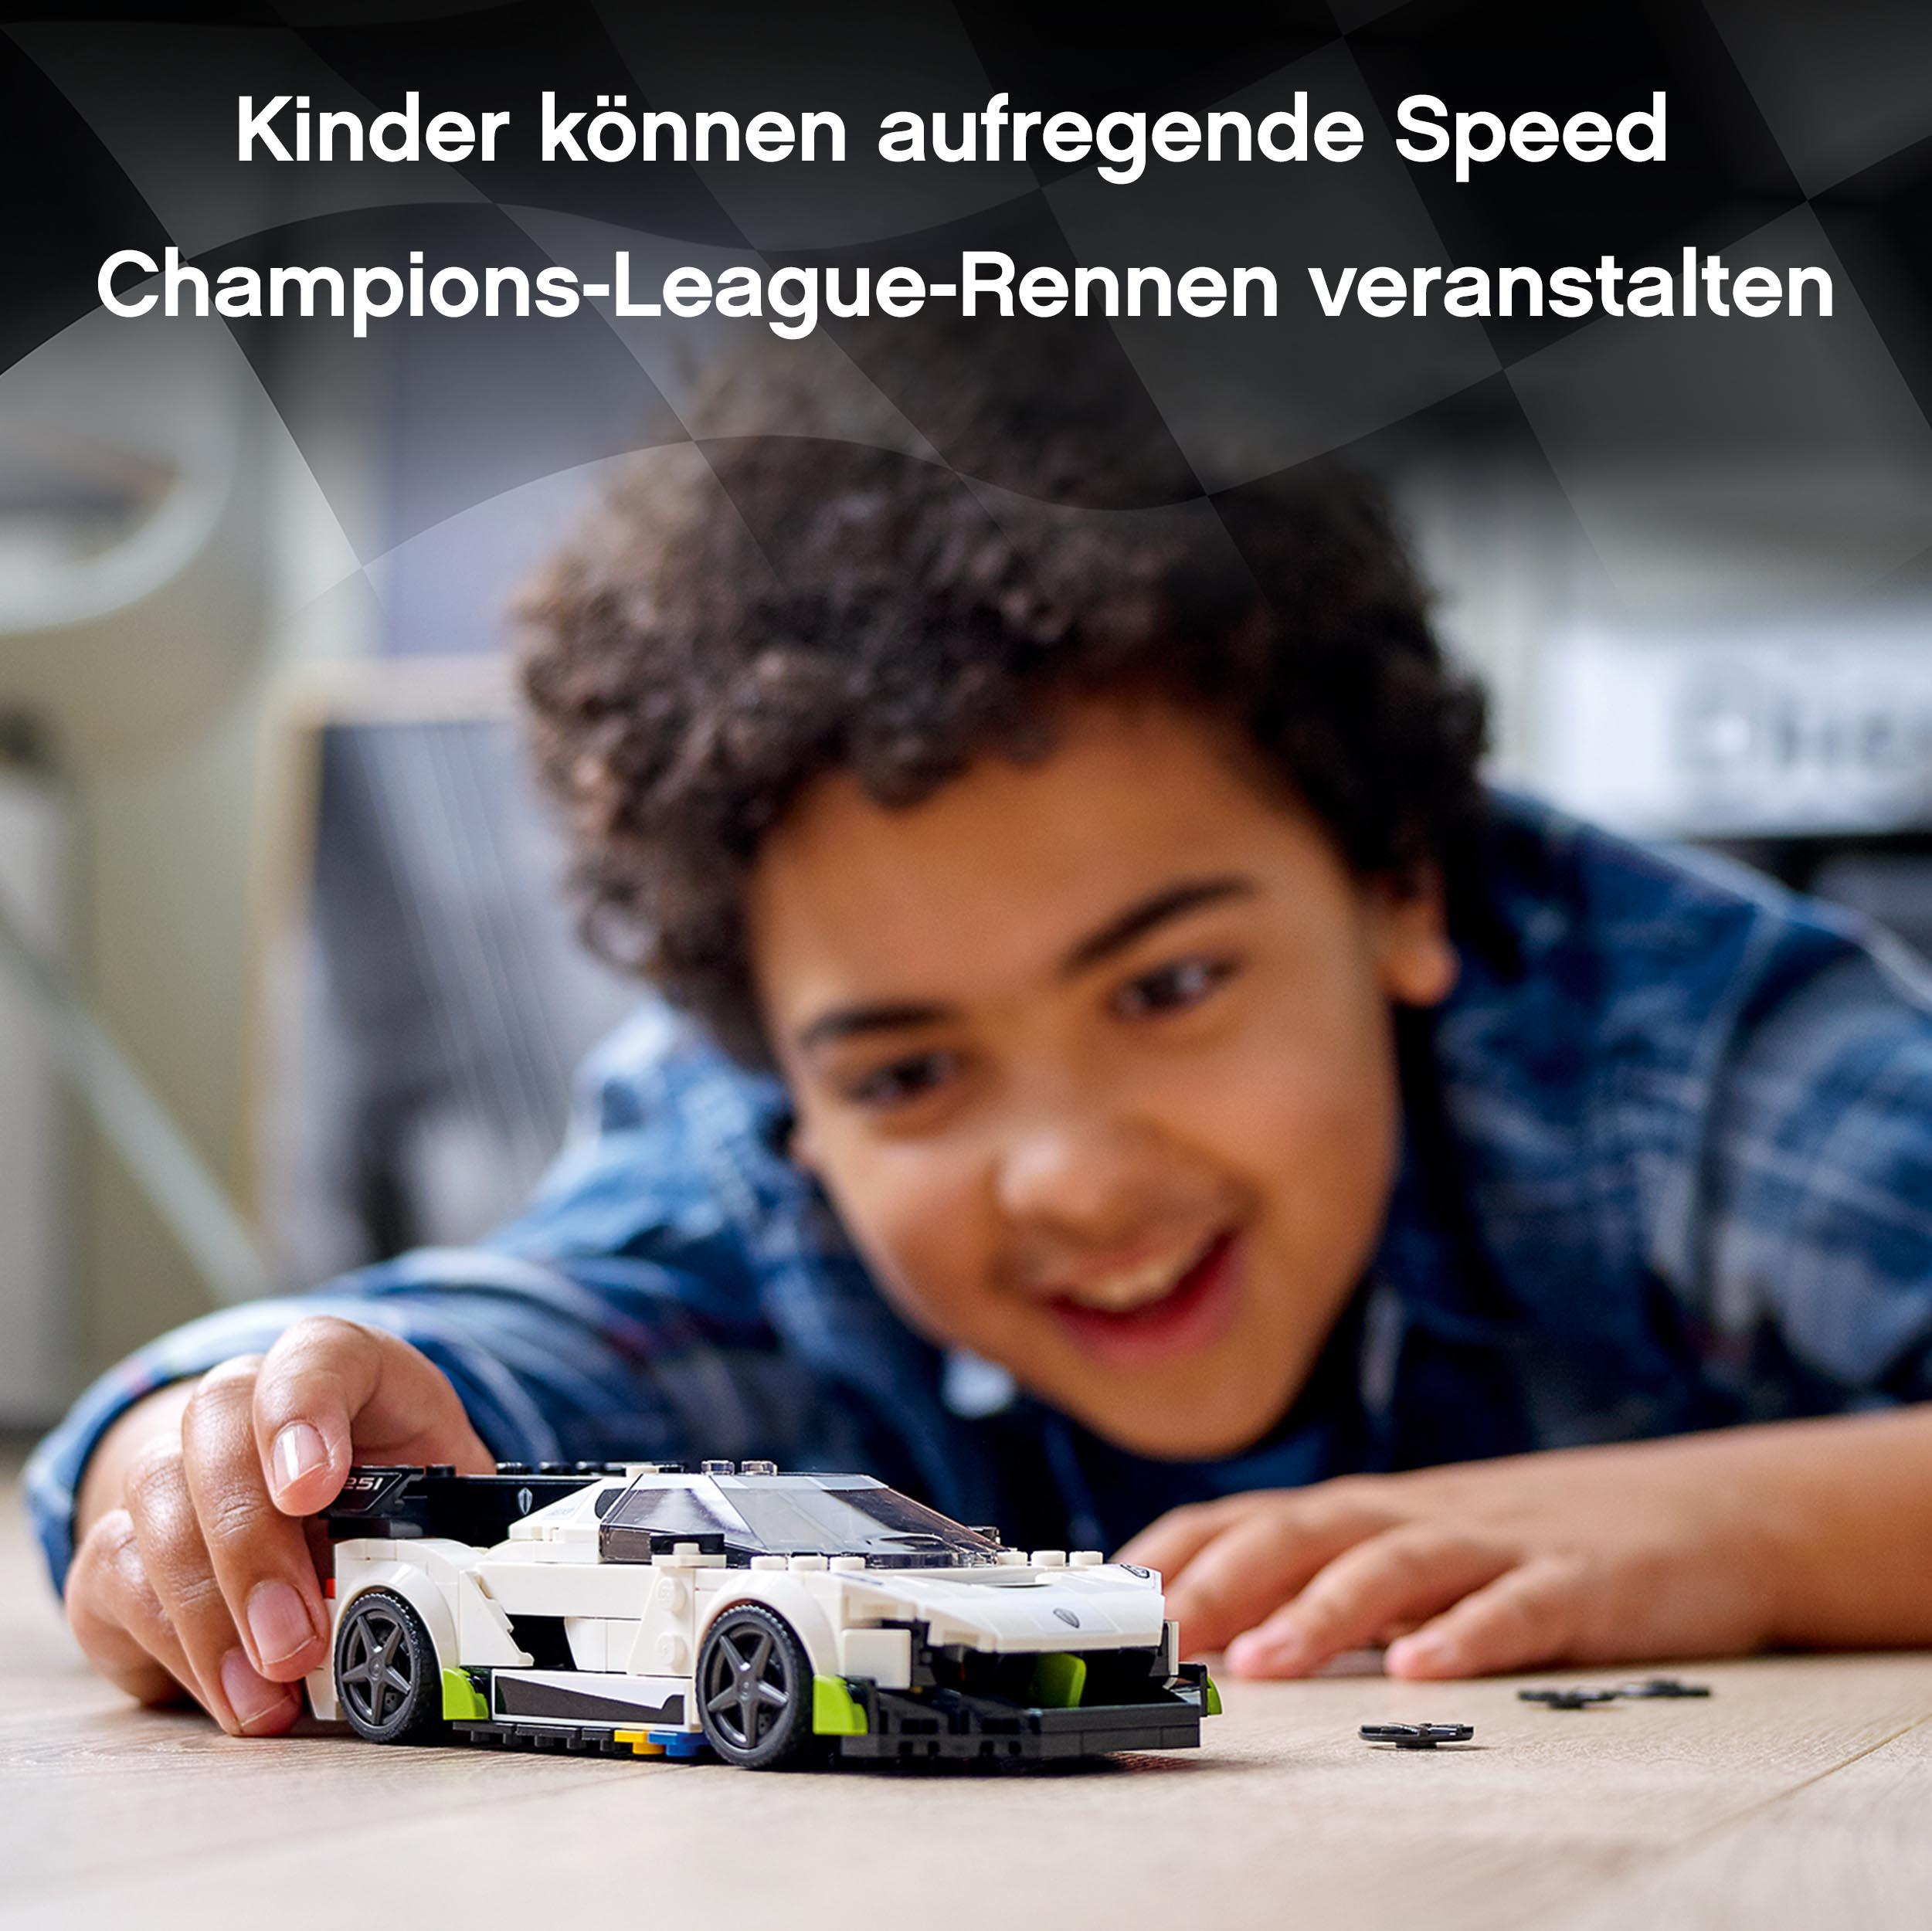 Bausatz, 76900 Jesko Mehrfarbig Koenigsegg Speed Champions LEGO